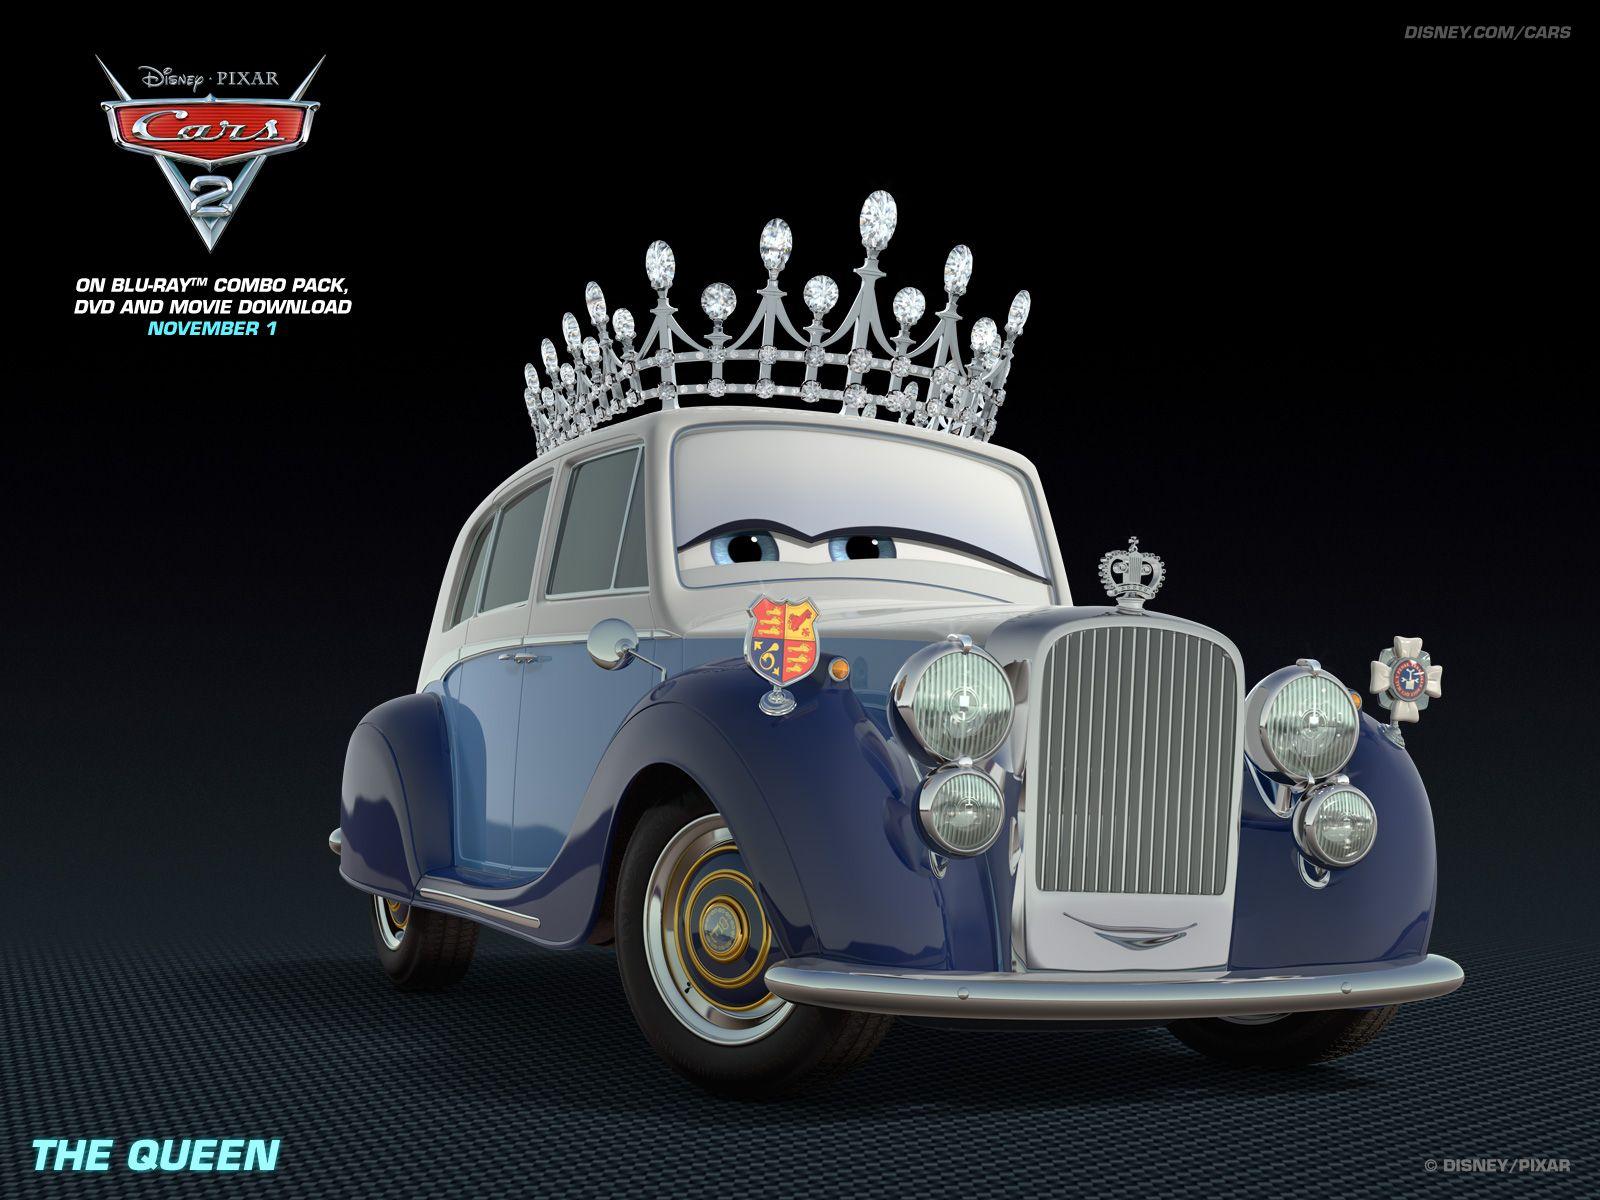 Queen Disney Pixar Cars 2 HD Wallpaper for iPhone